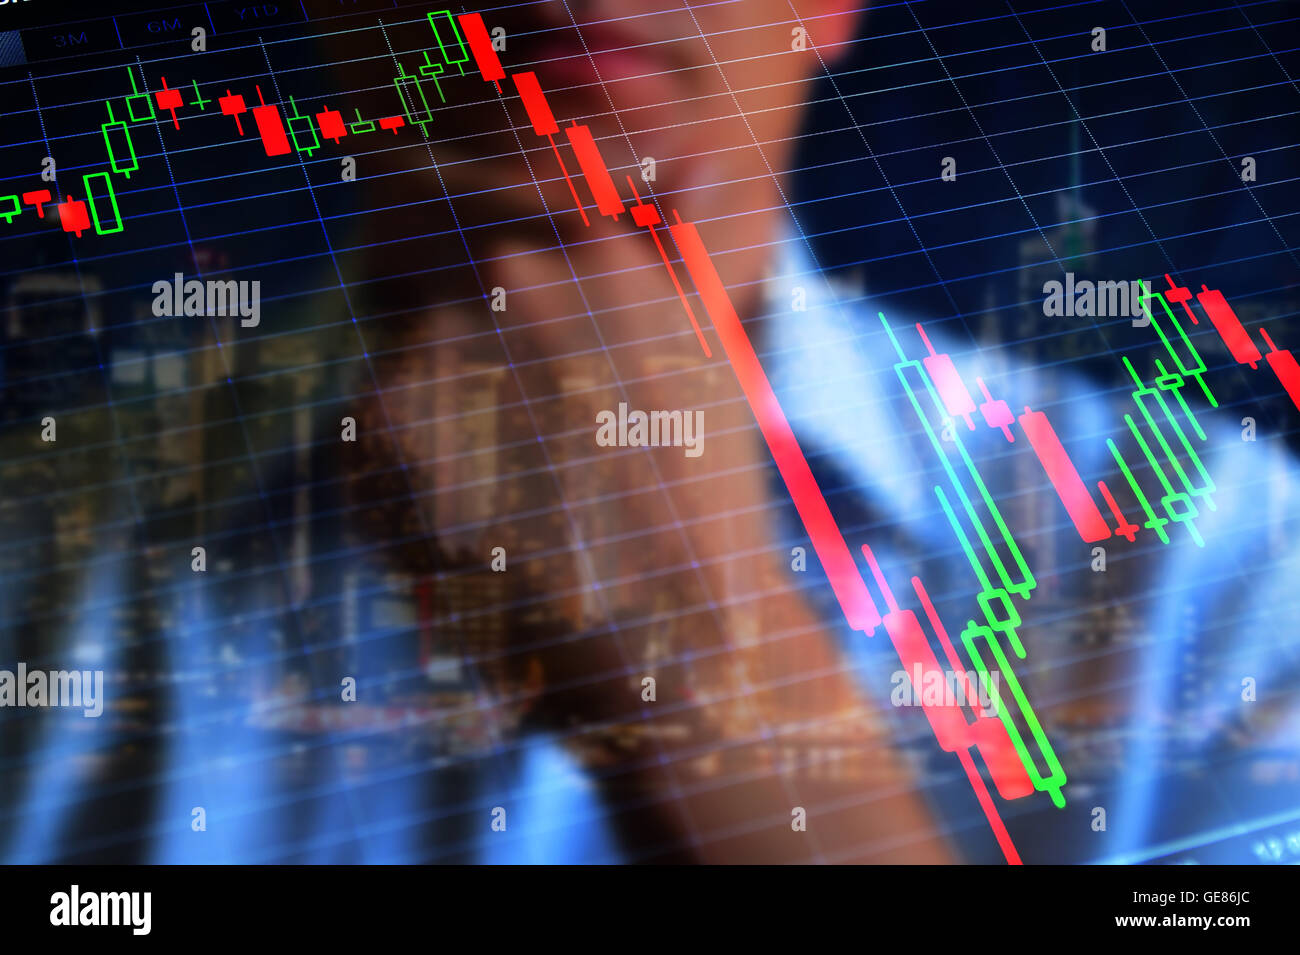 Stock market crash Stock Photo